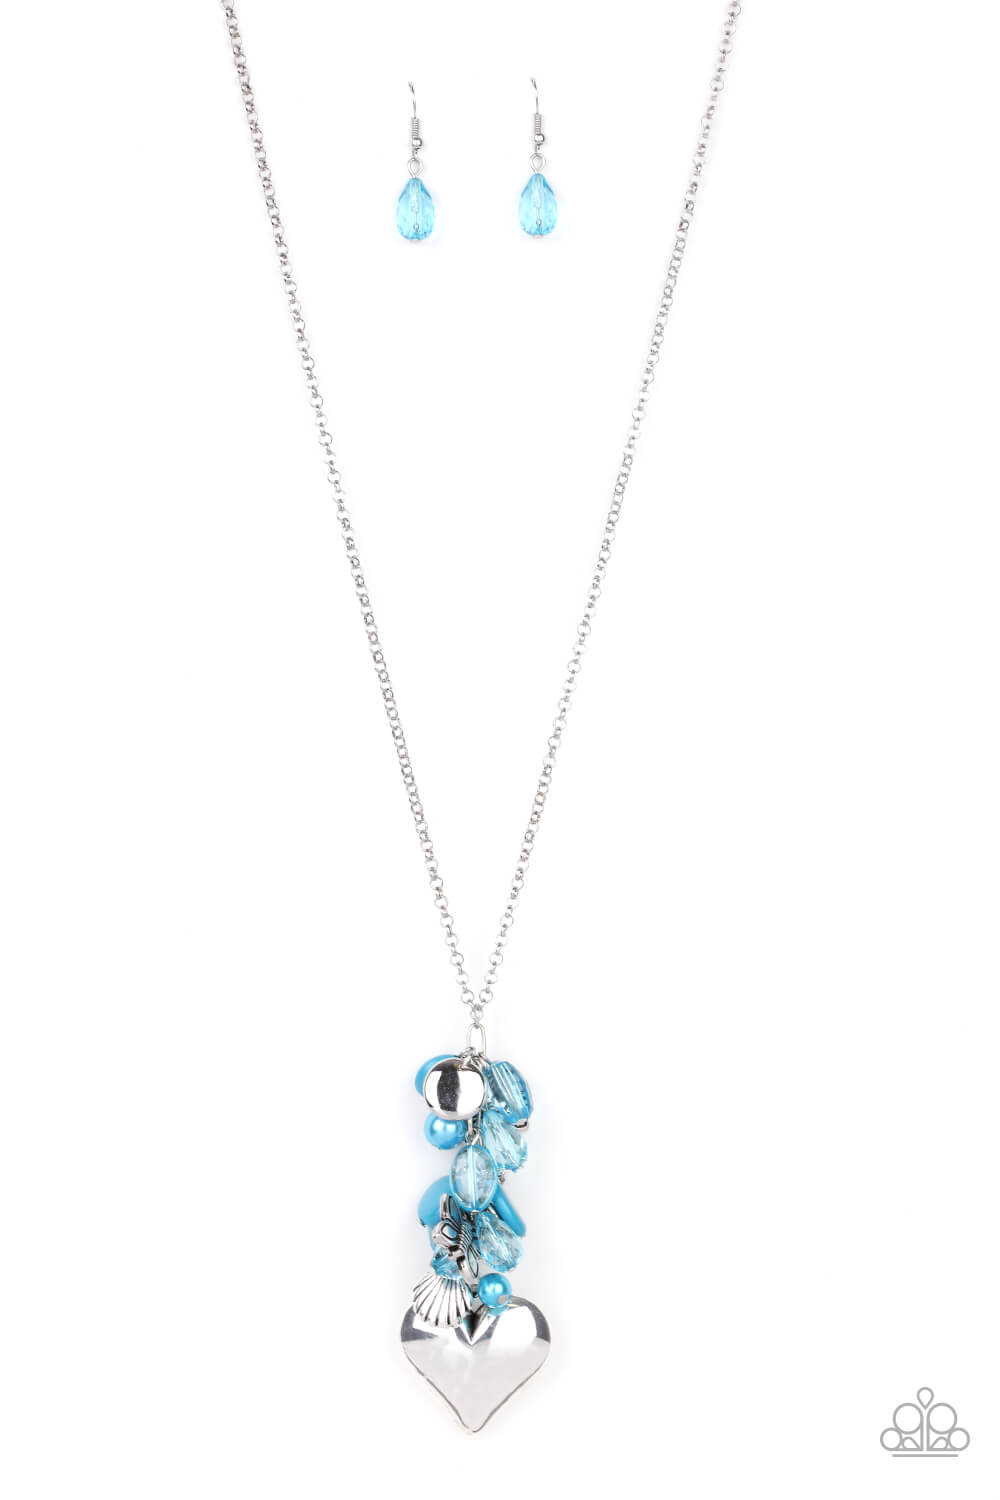 Beach Buzz - Blue Charm Necklace Set - Princess Glam Shop